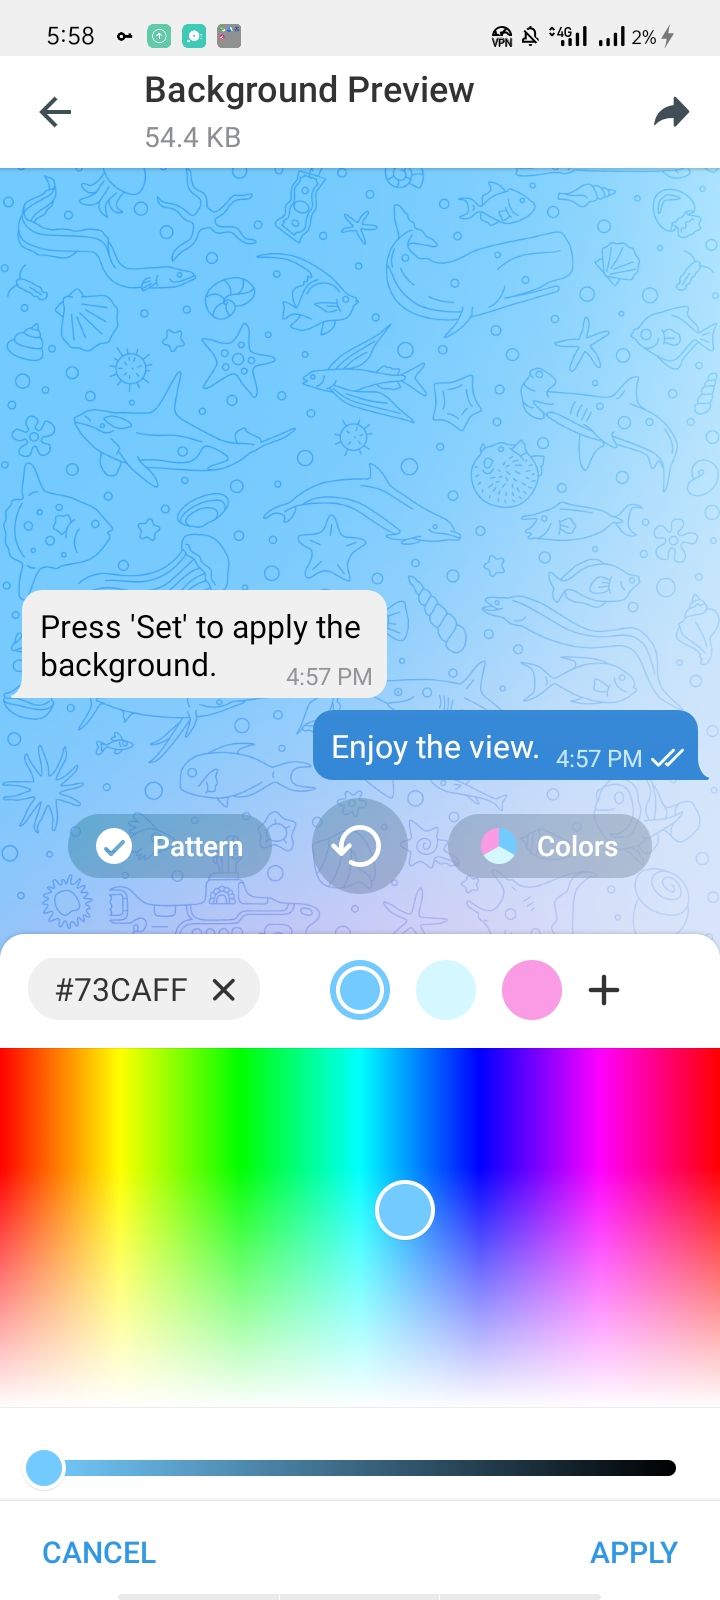 Final Preview Of Custom Telegram Background In Telegram App